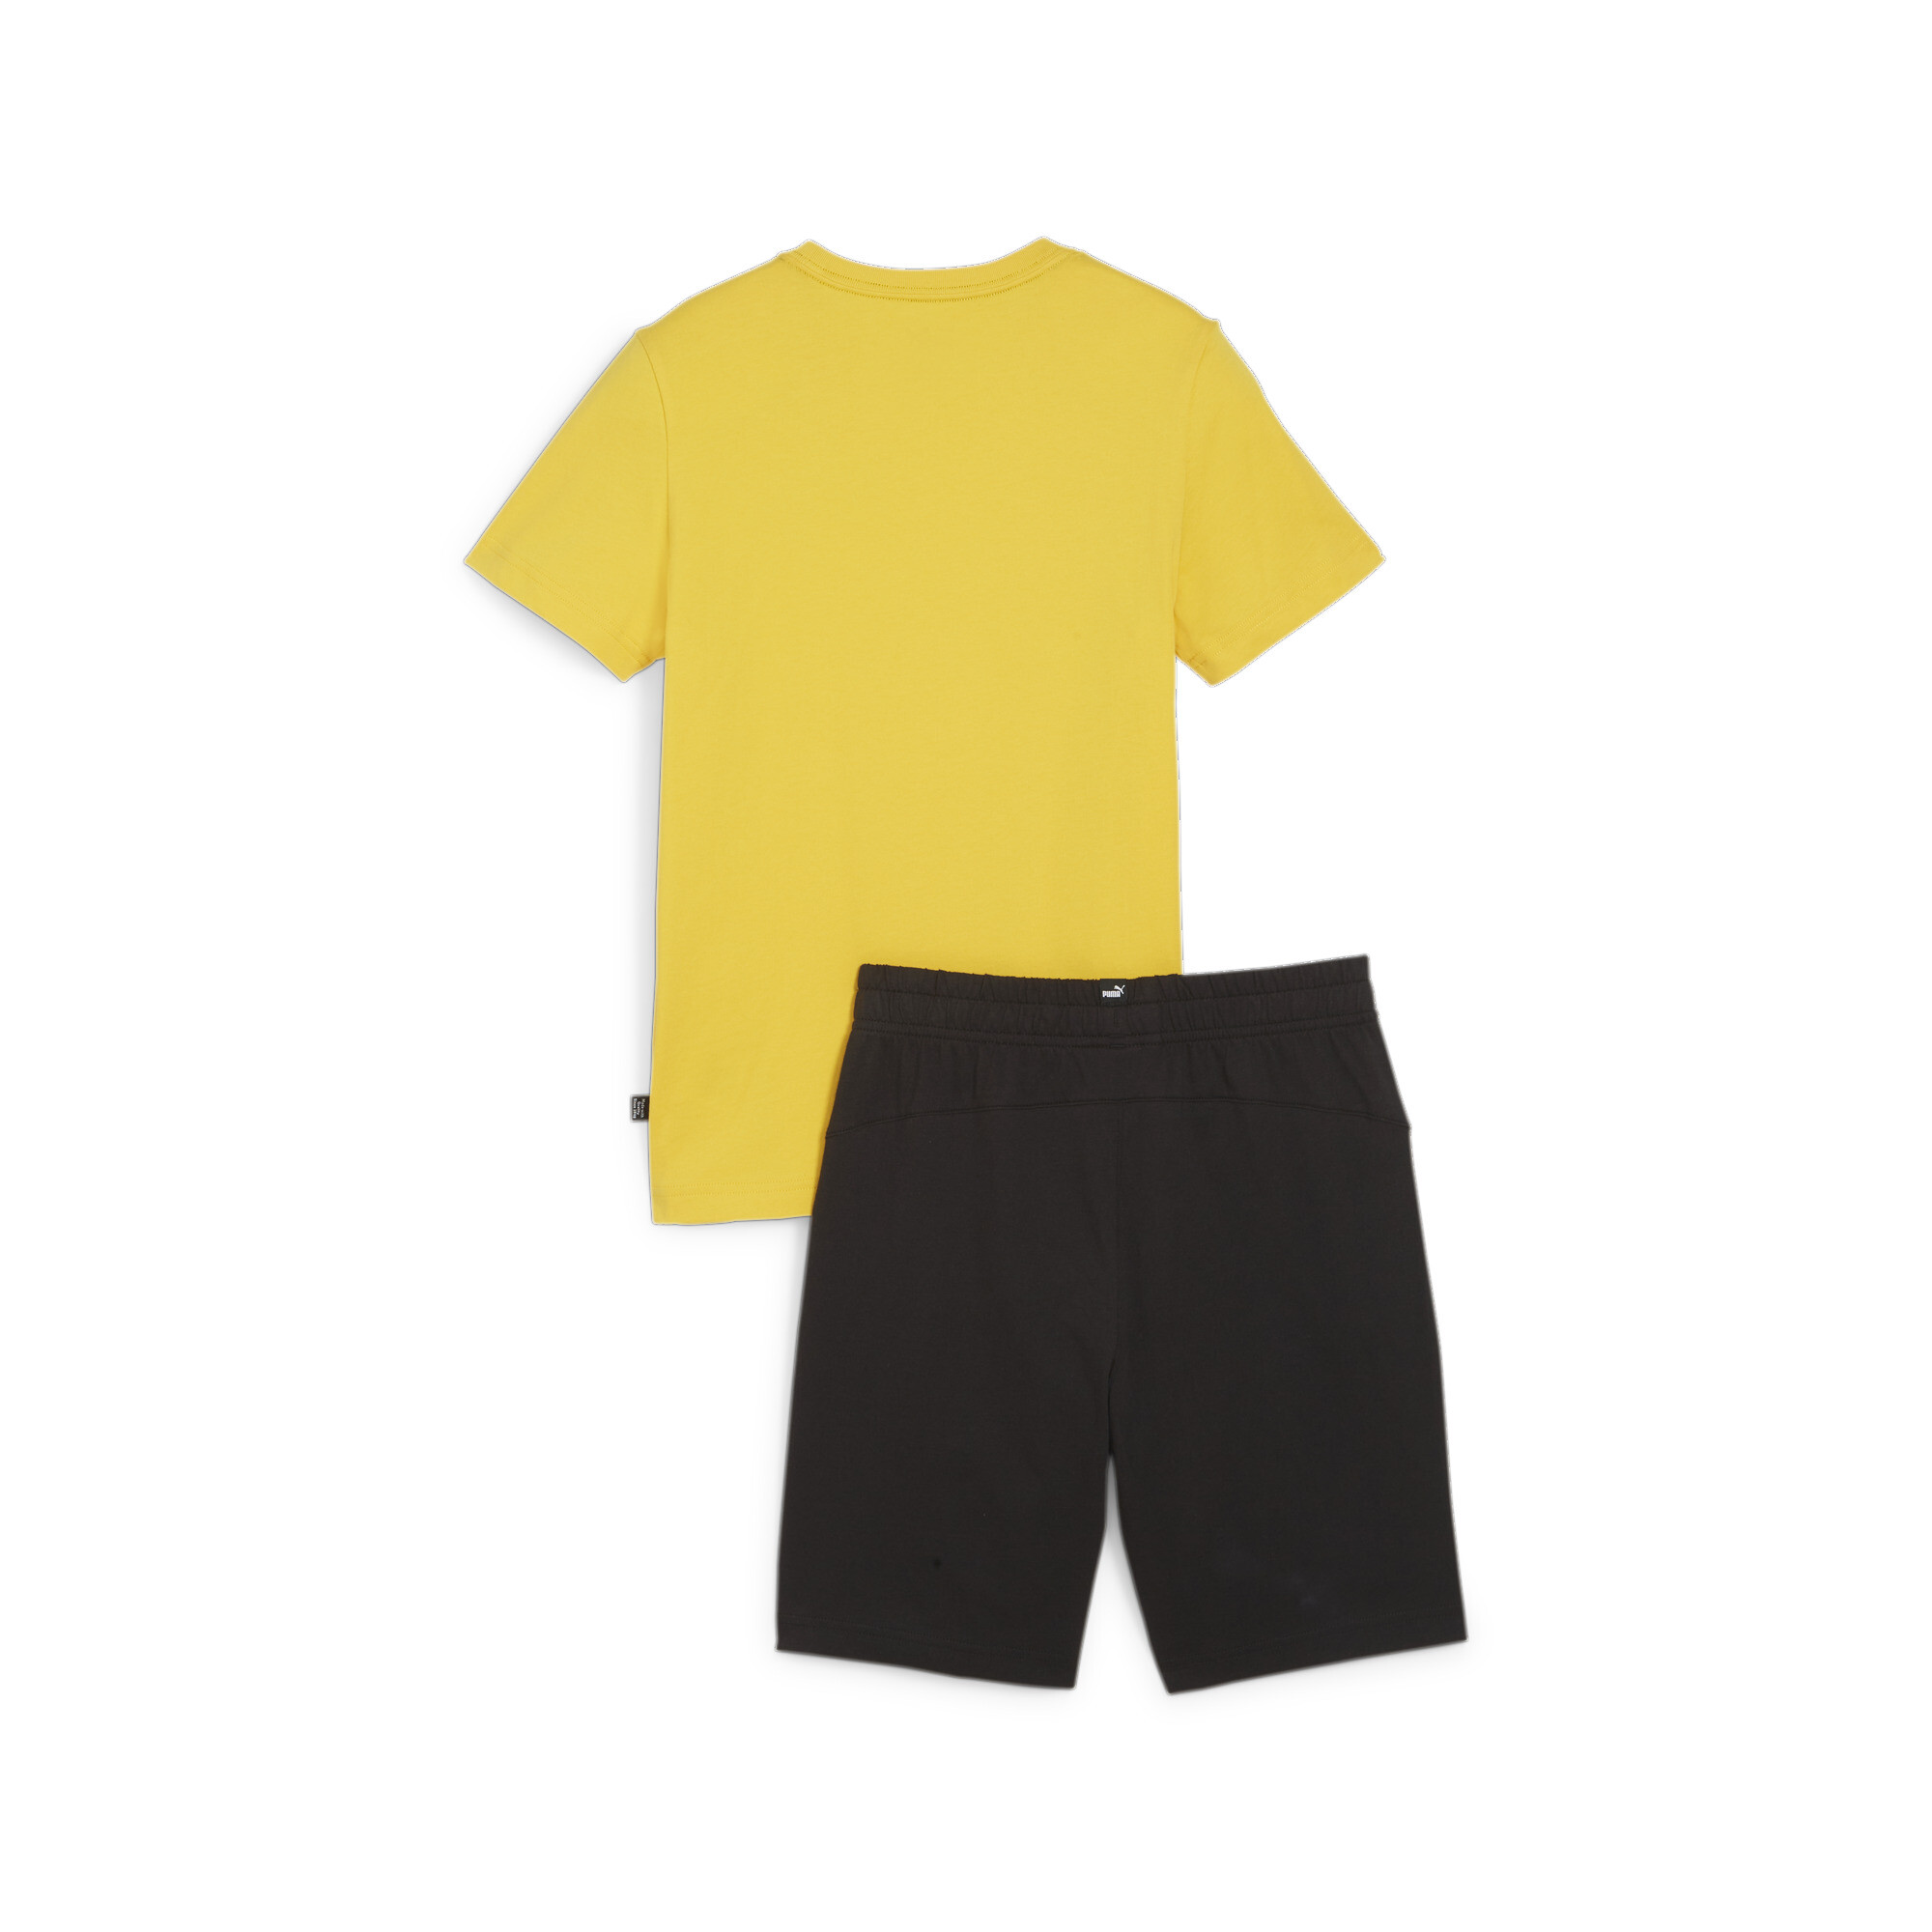 Men's Puma Jersey Youth Shorts Set, Yellow, Size 3-4Y, Clothing